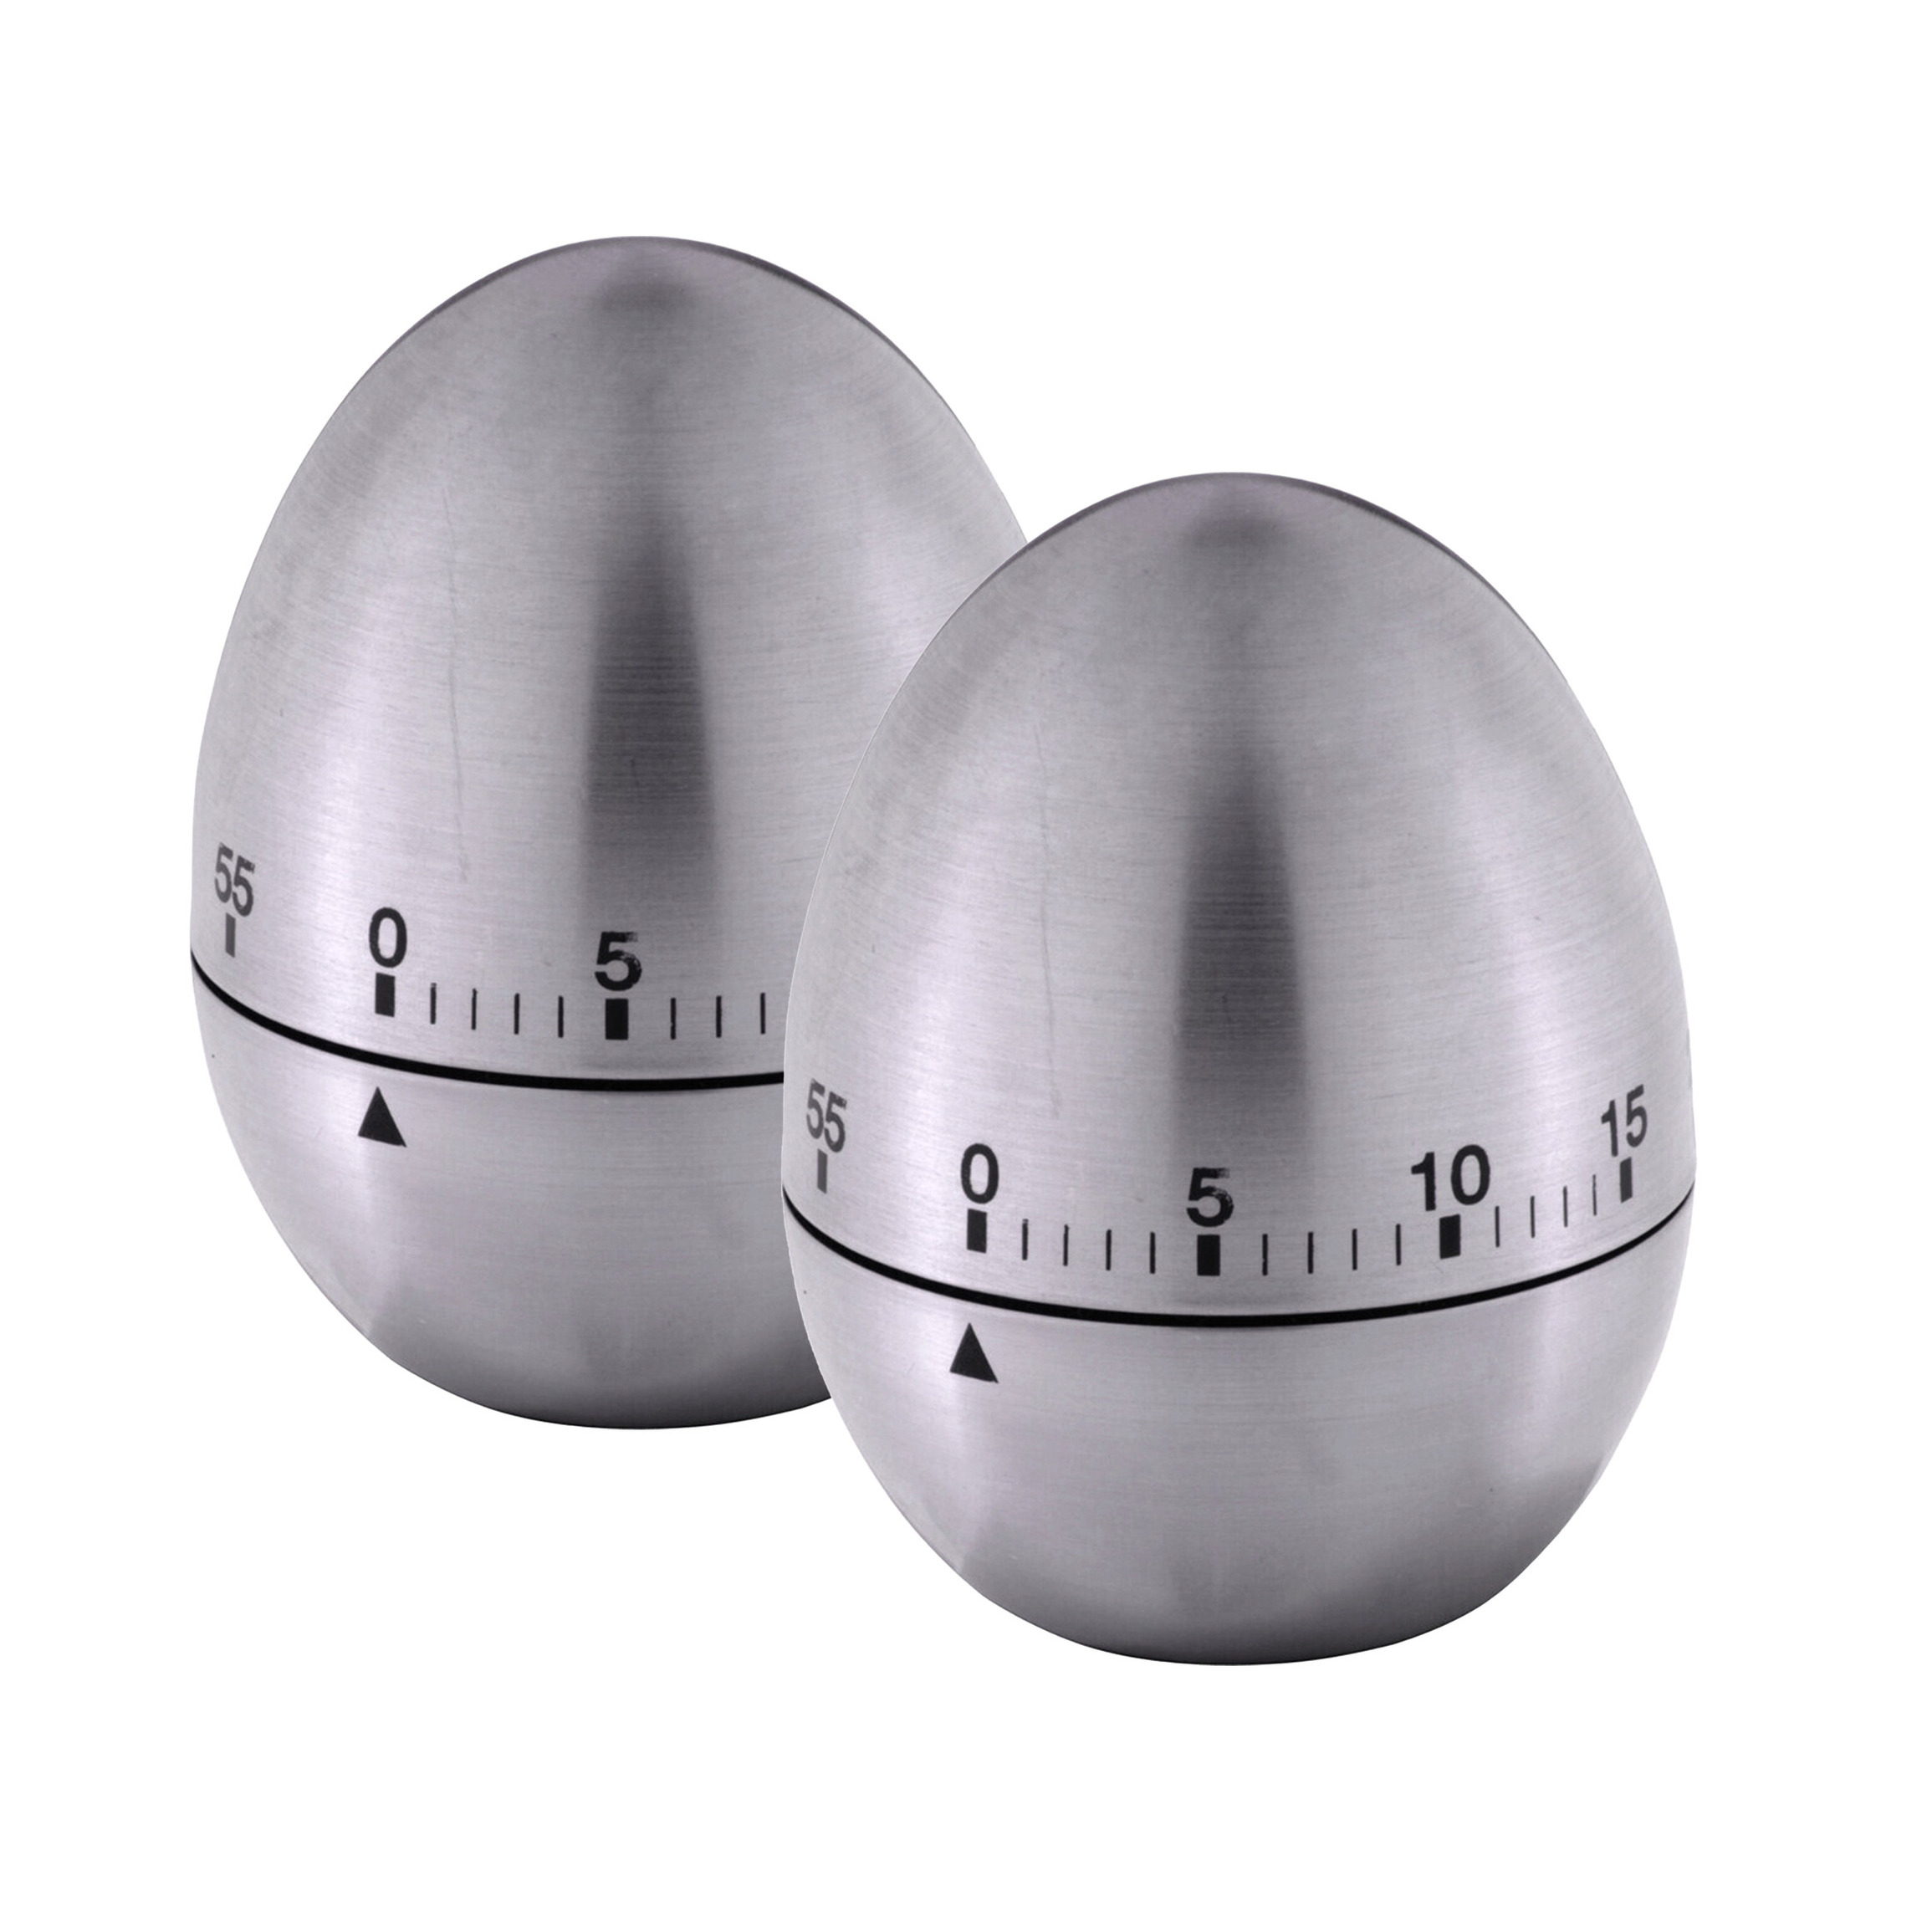 2x stuks kookwekkers-eierwekkers in ei vorm zilver RVS 8 cm